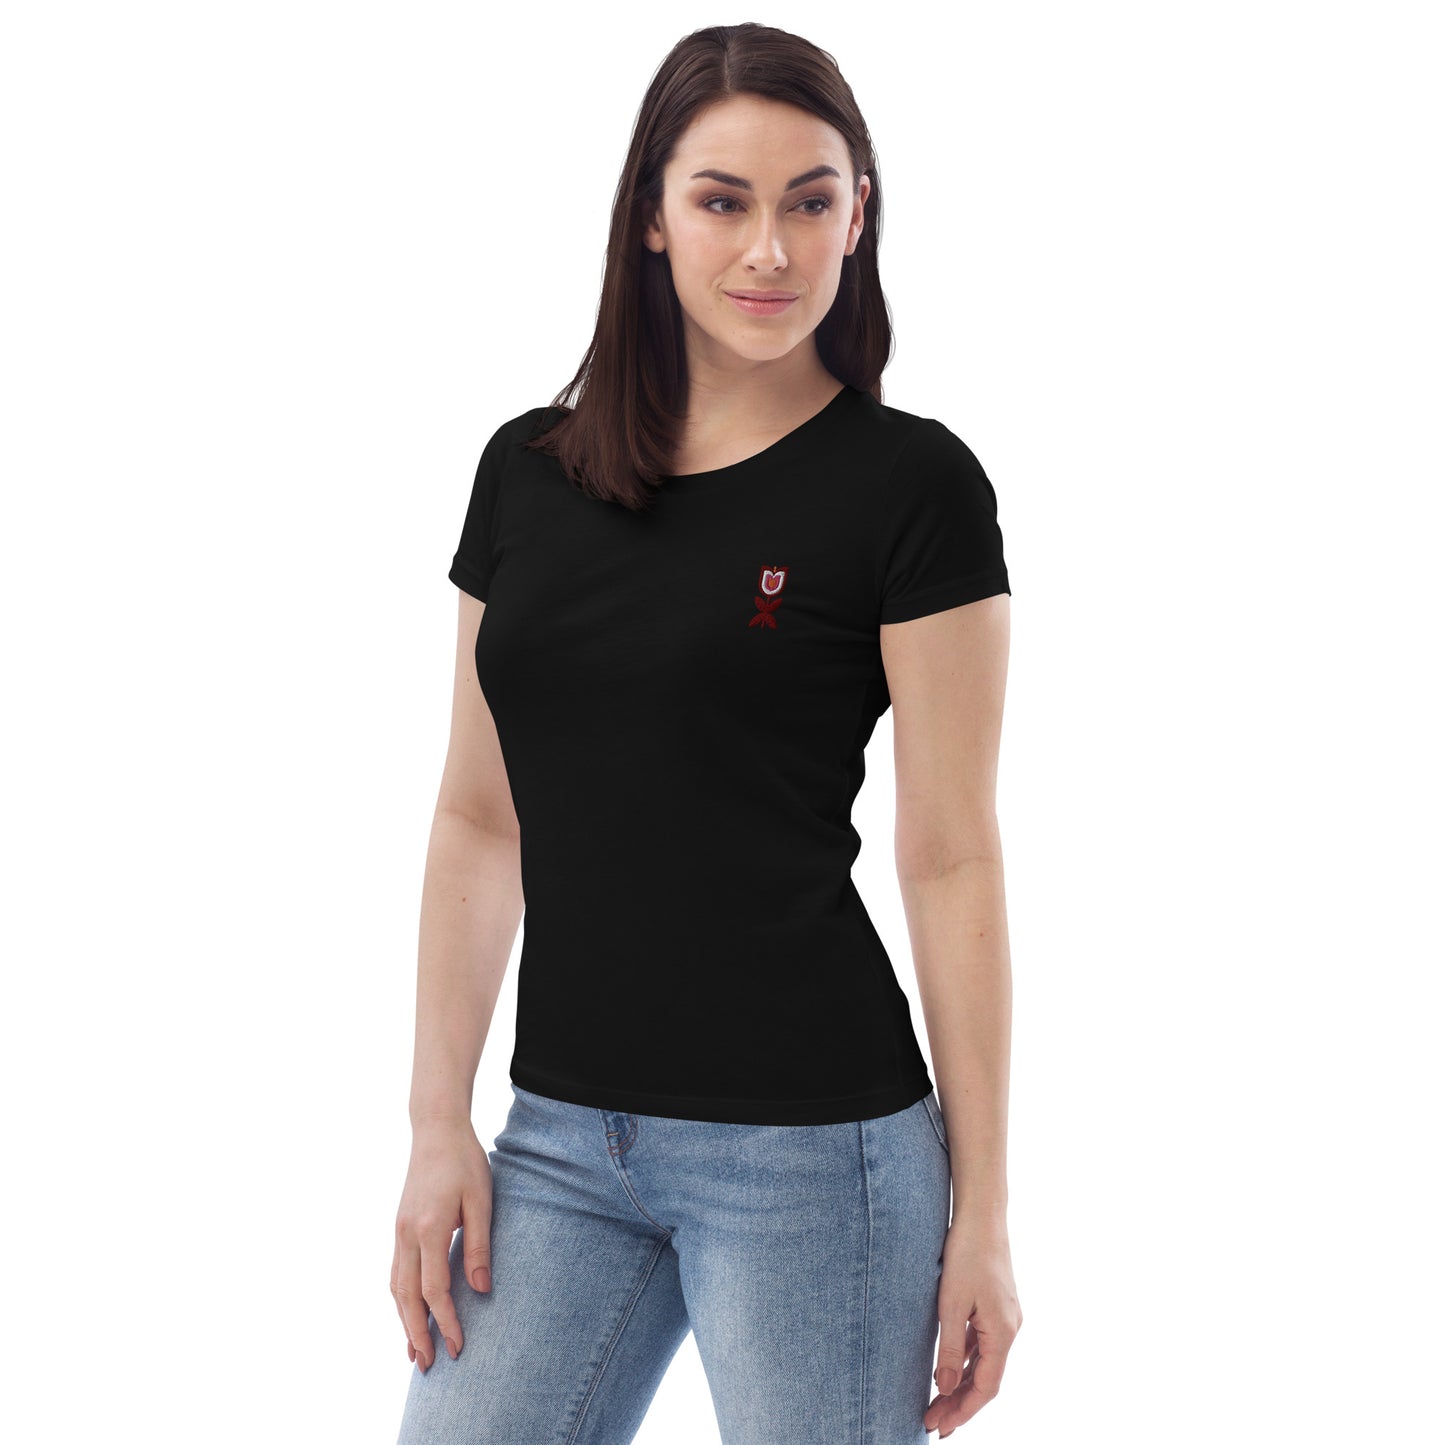 Embroidered tulip flower Bauhaus style T-shirt in organic cotton - Women black